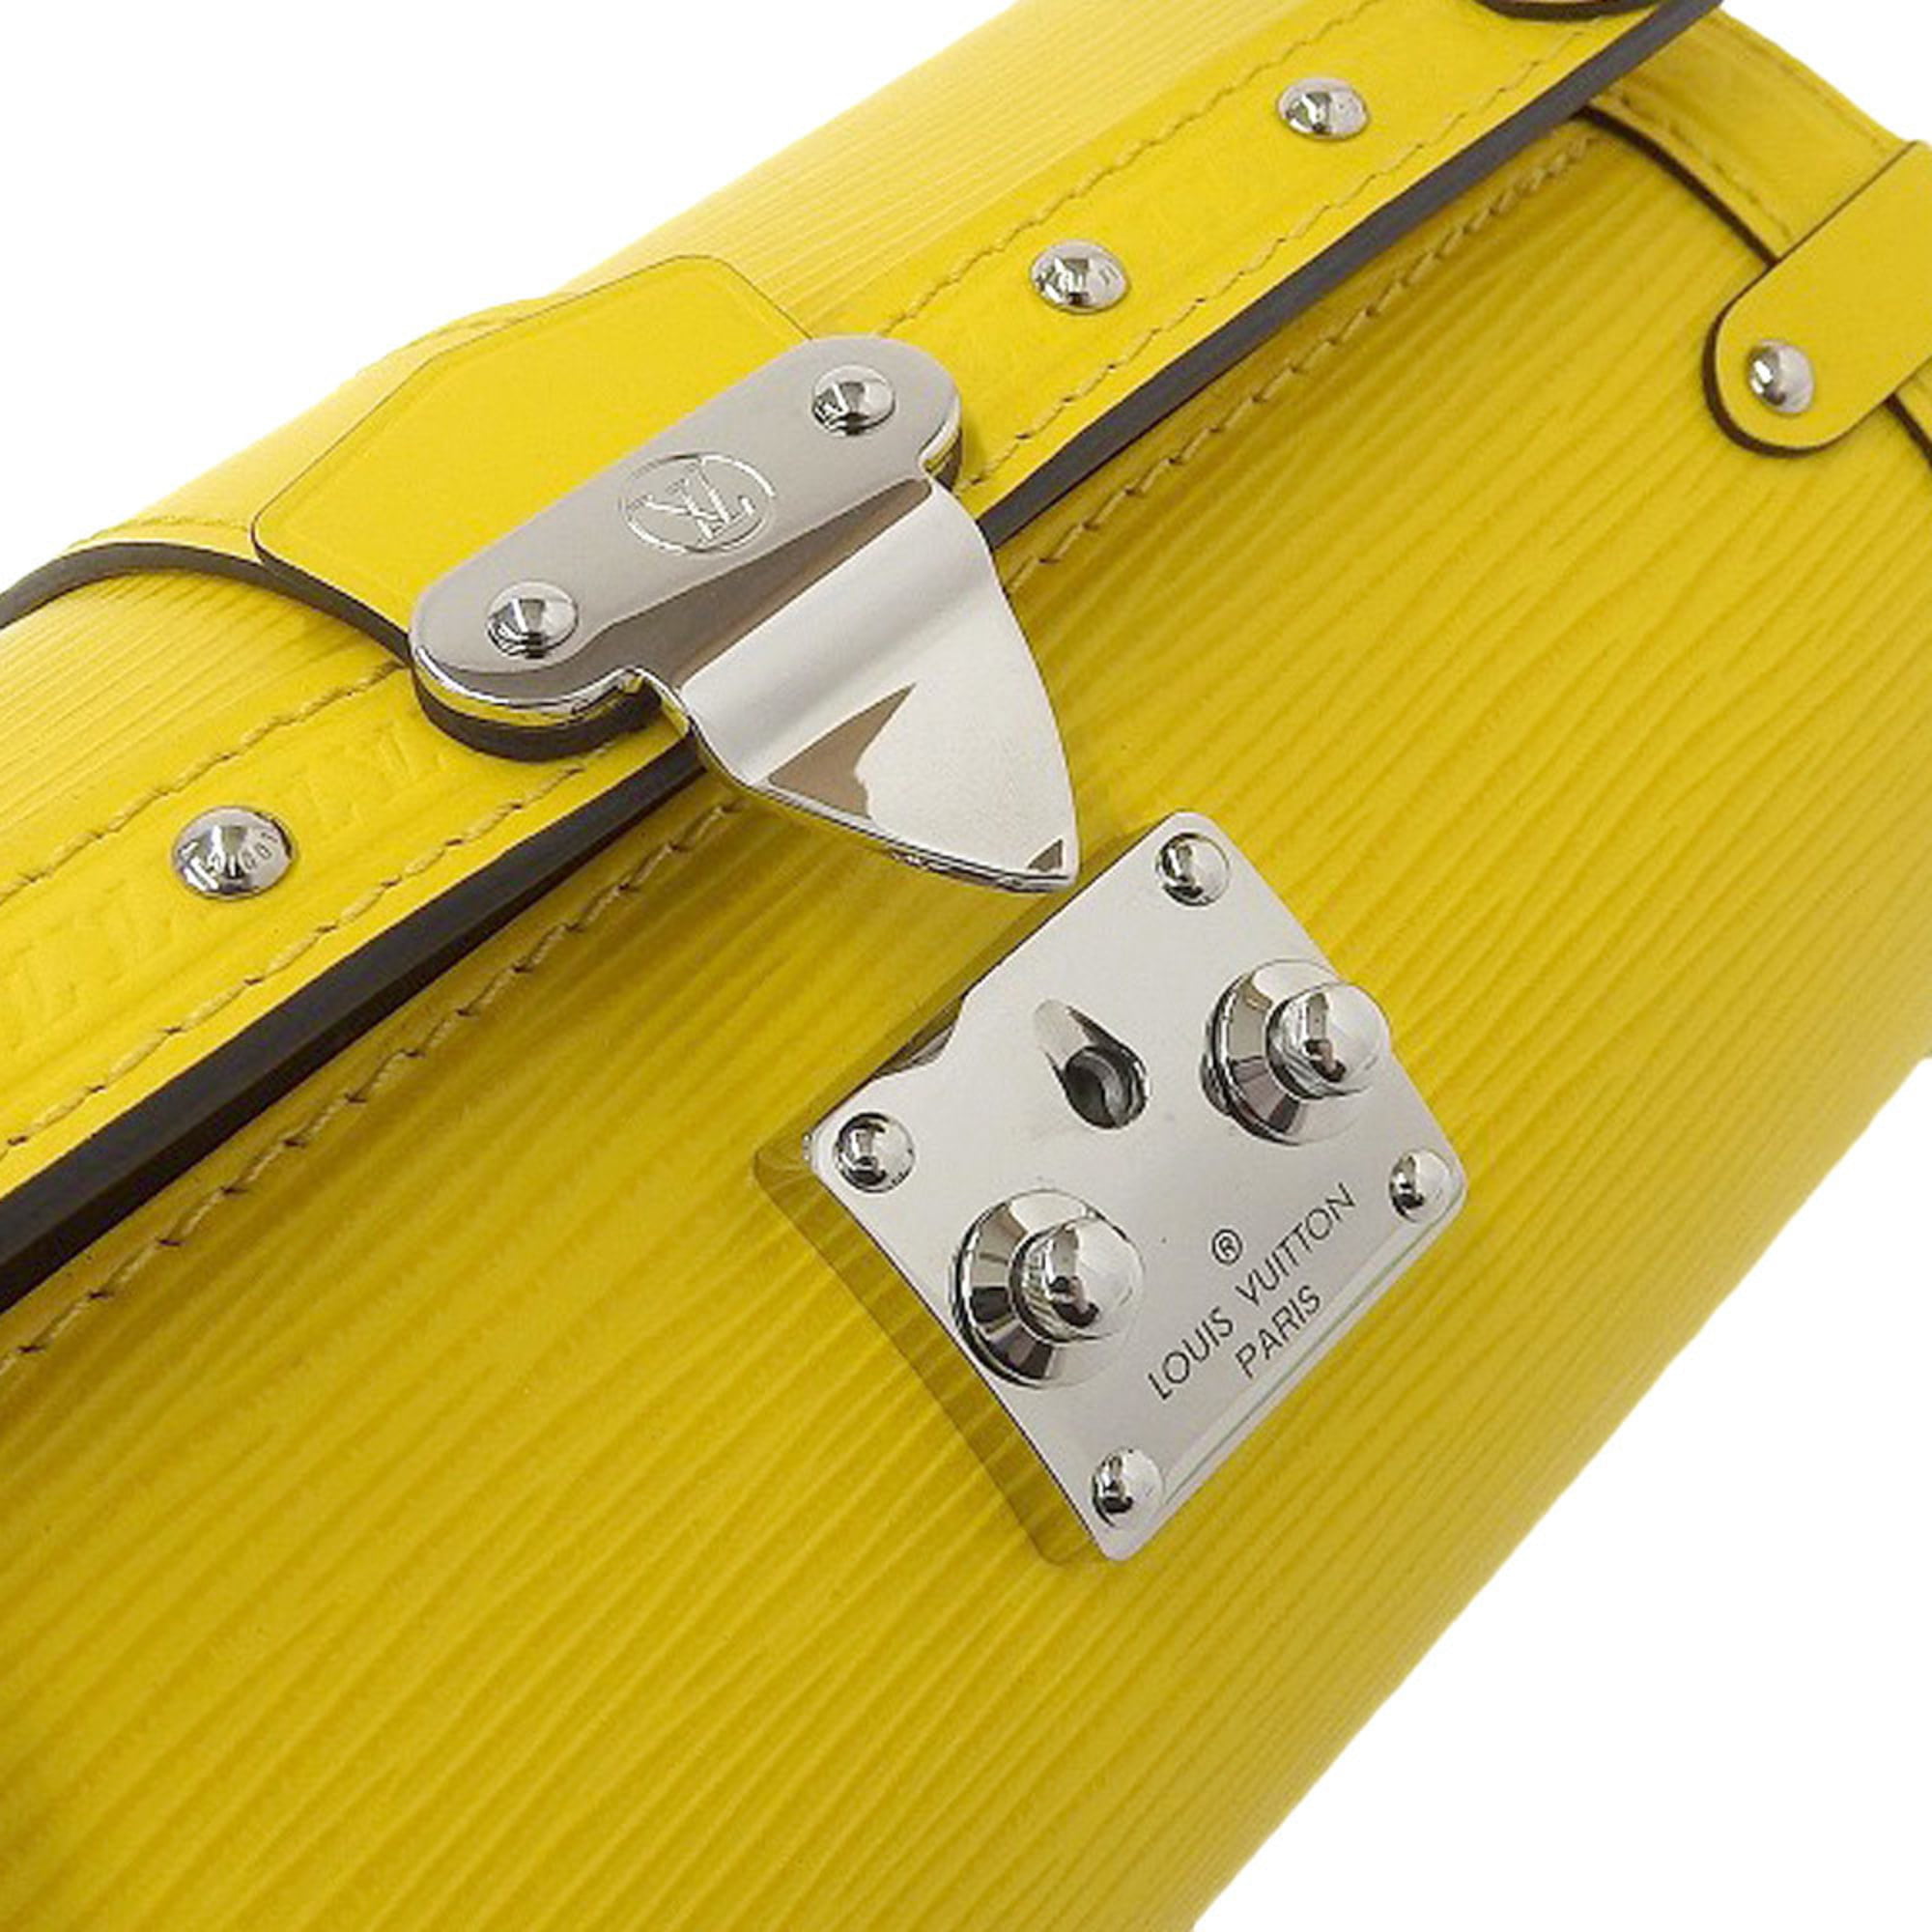 Papillon trunk leather handbag Louis Vuitton Yellow in Leather